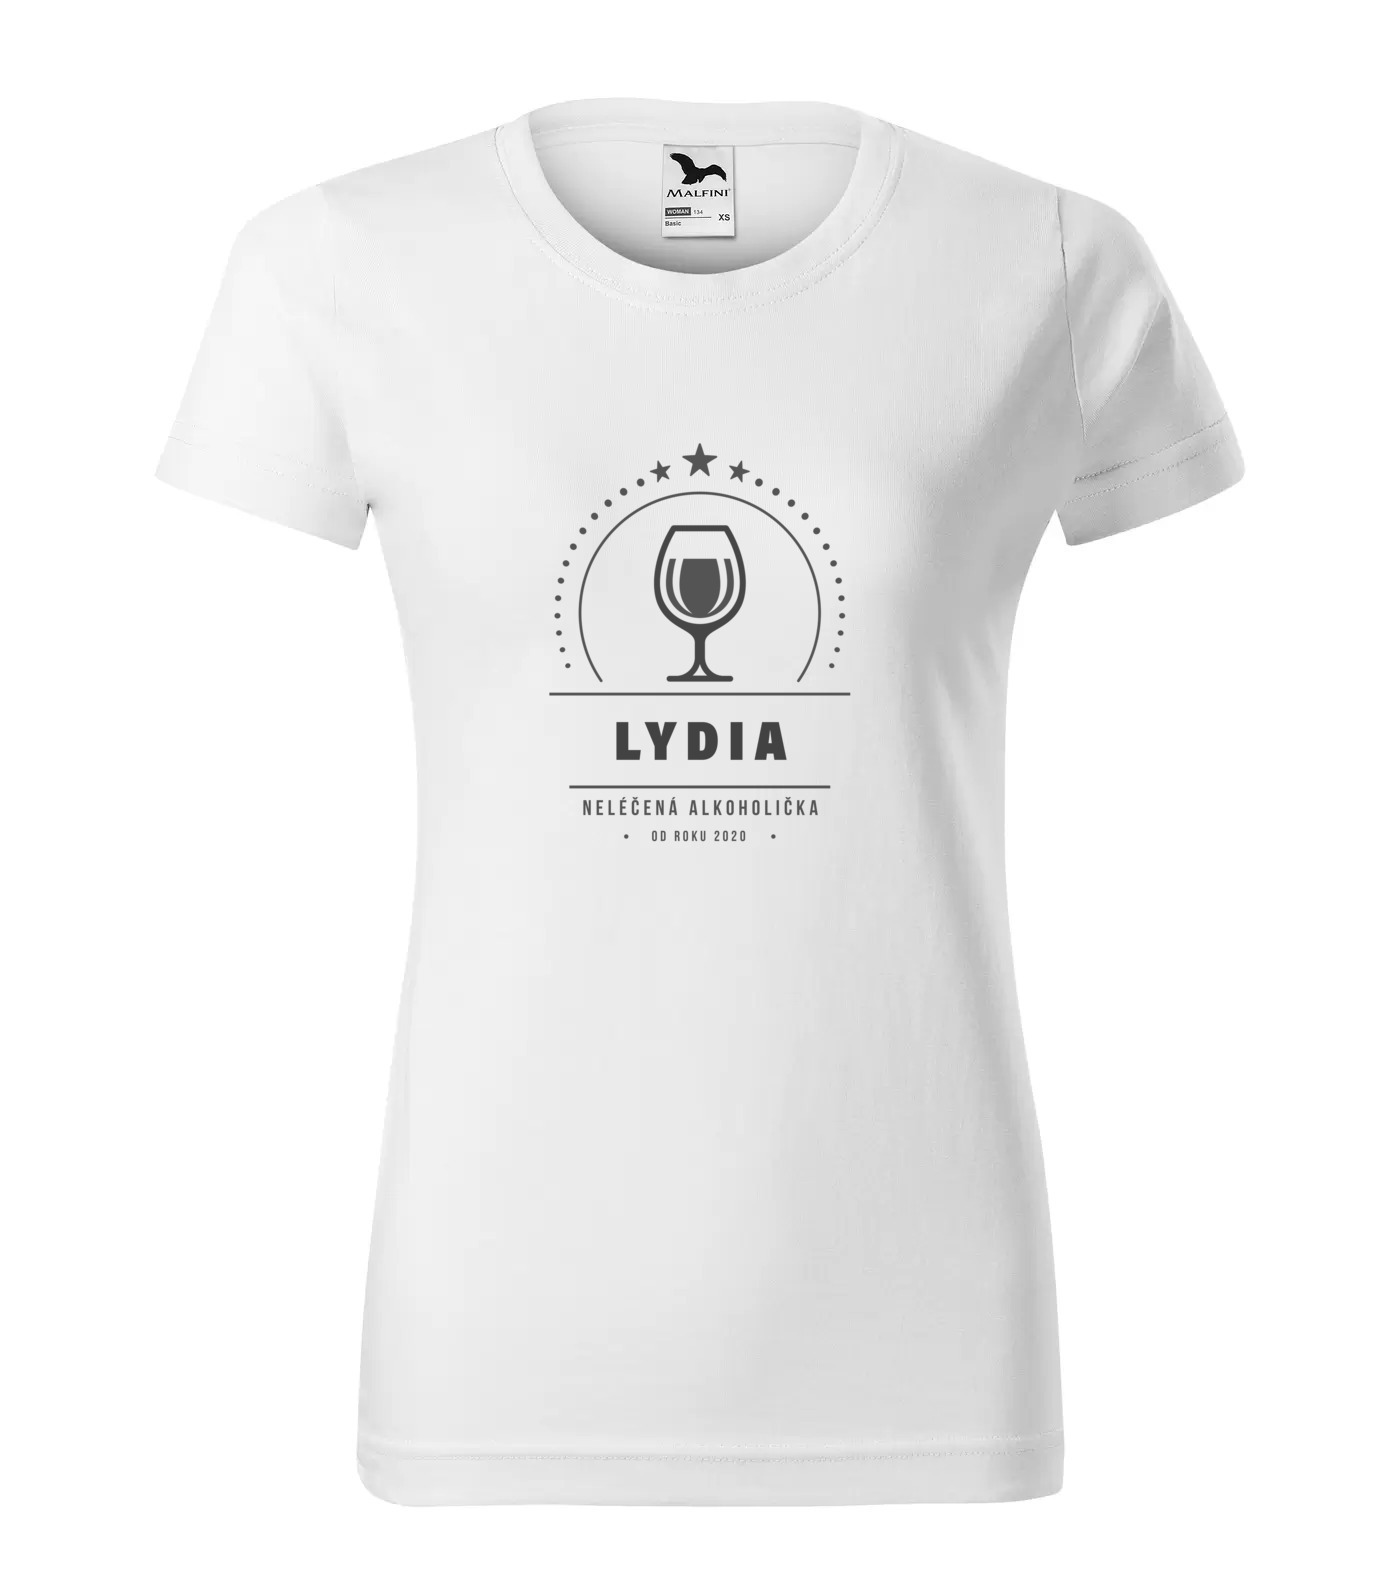 Tričko Alkoholička Lydia